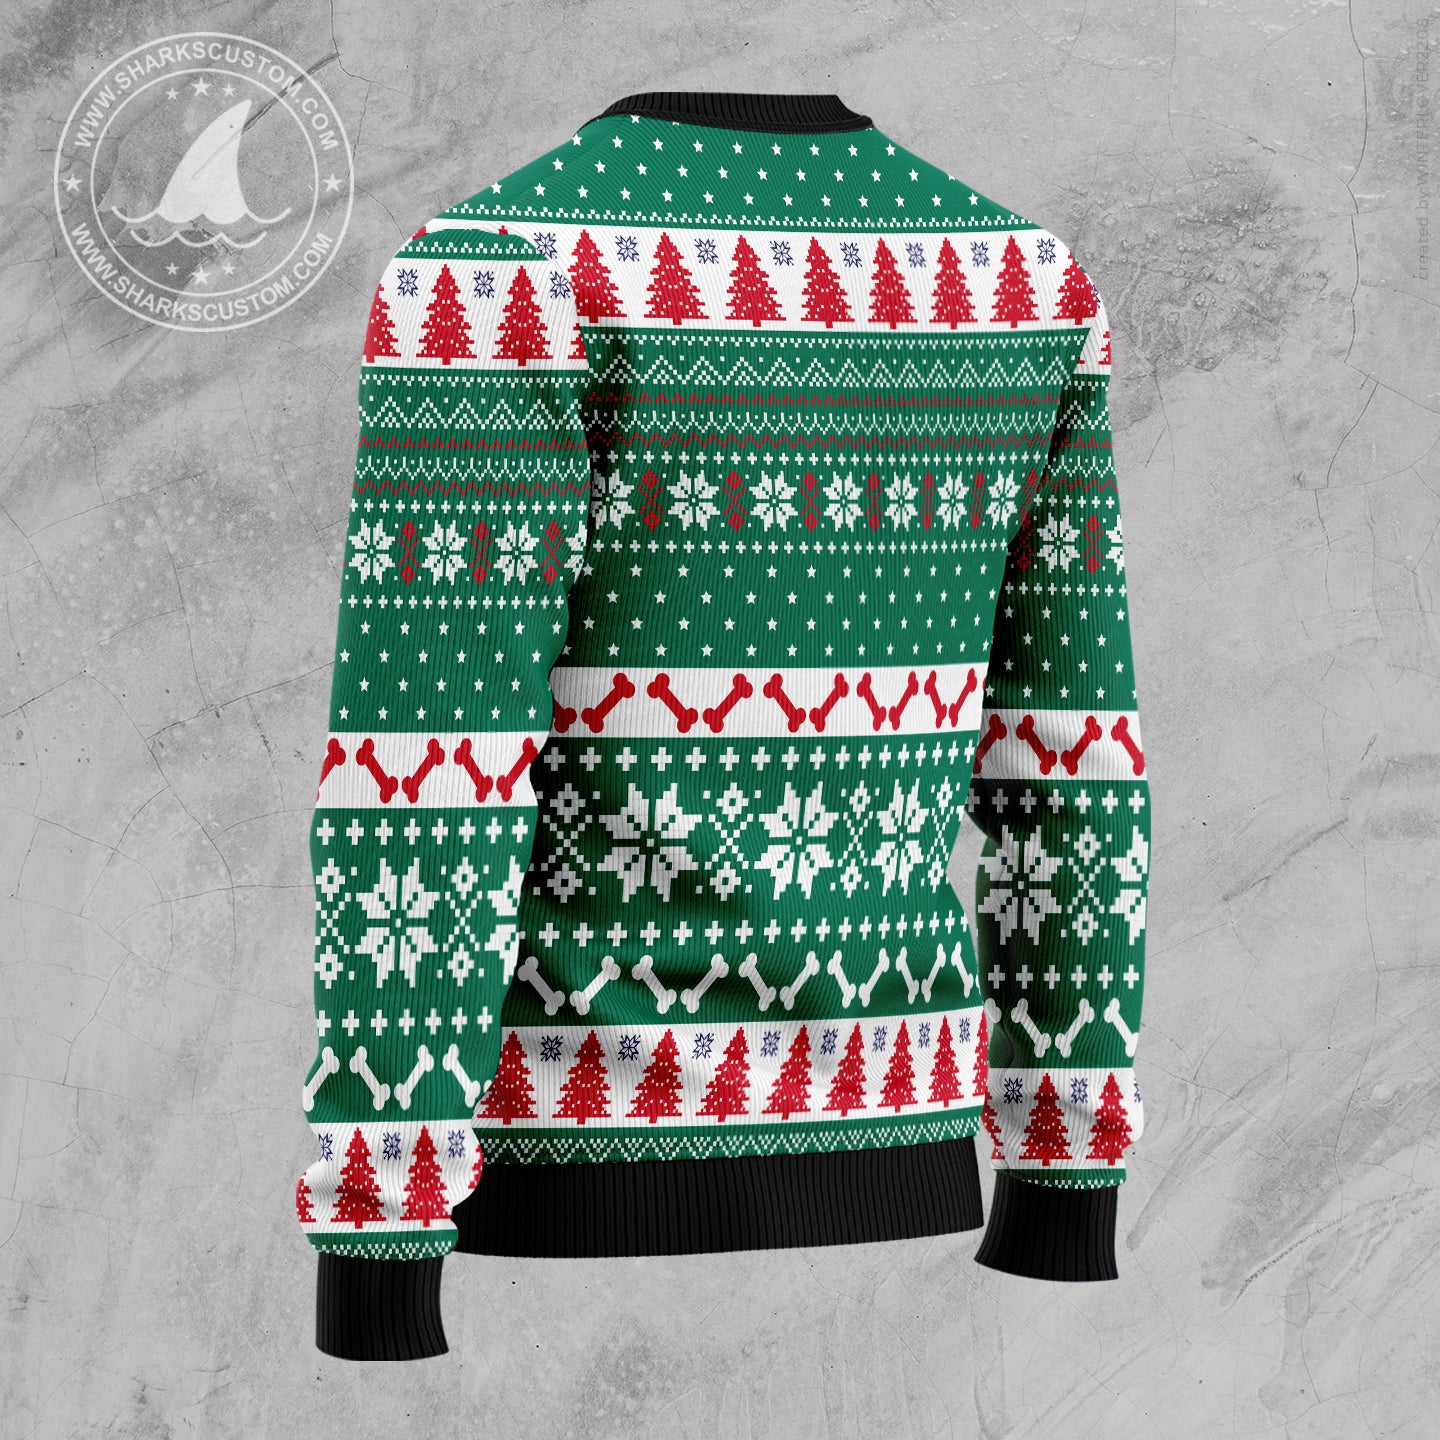 Welsh Corgi Dog Dad TG51110 Ugly Christmas Sweater